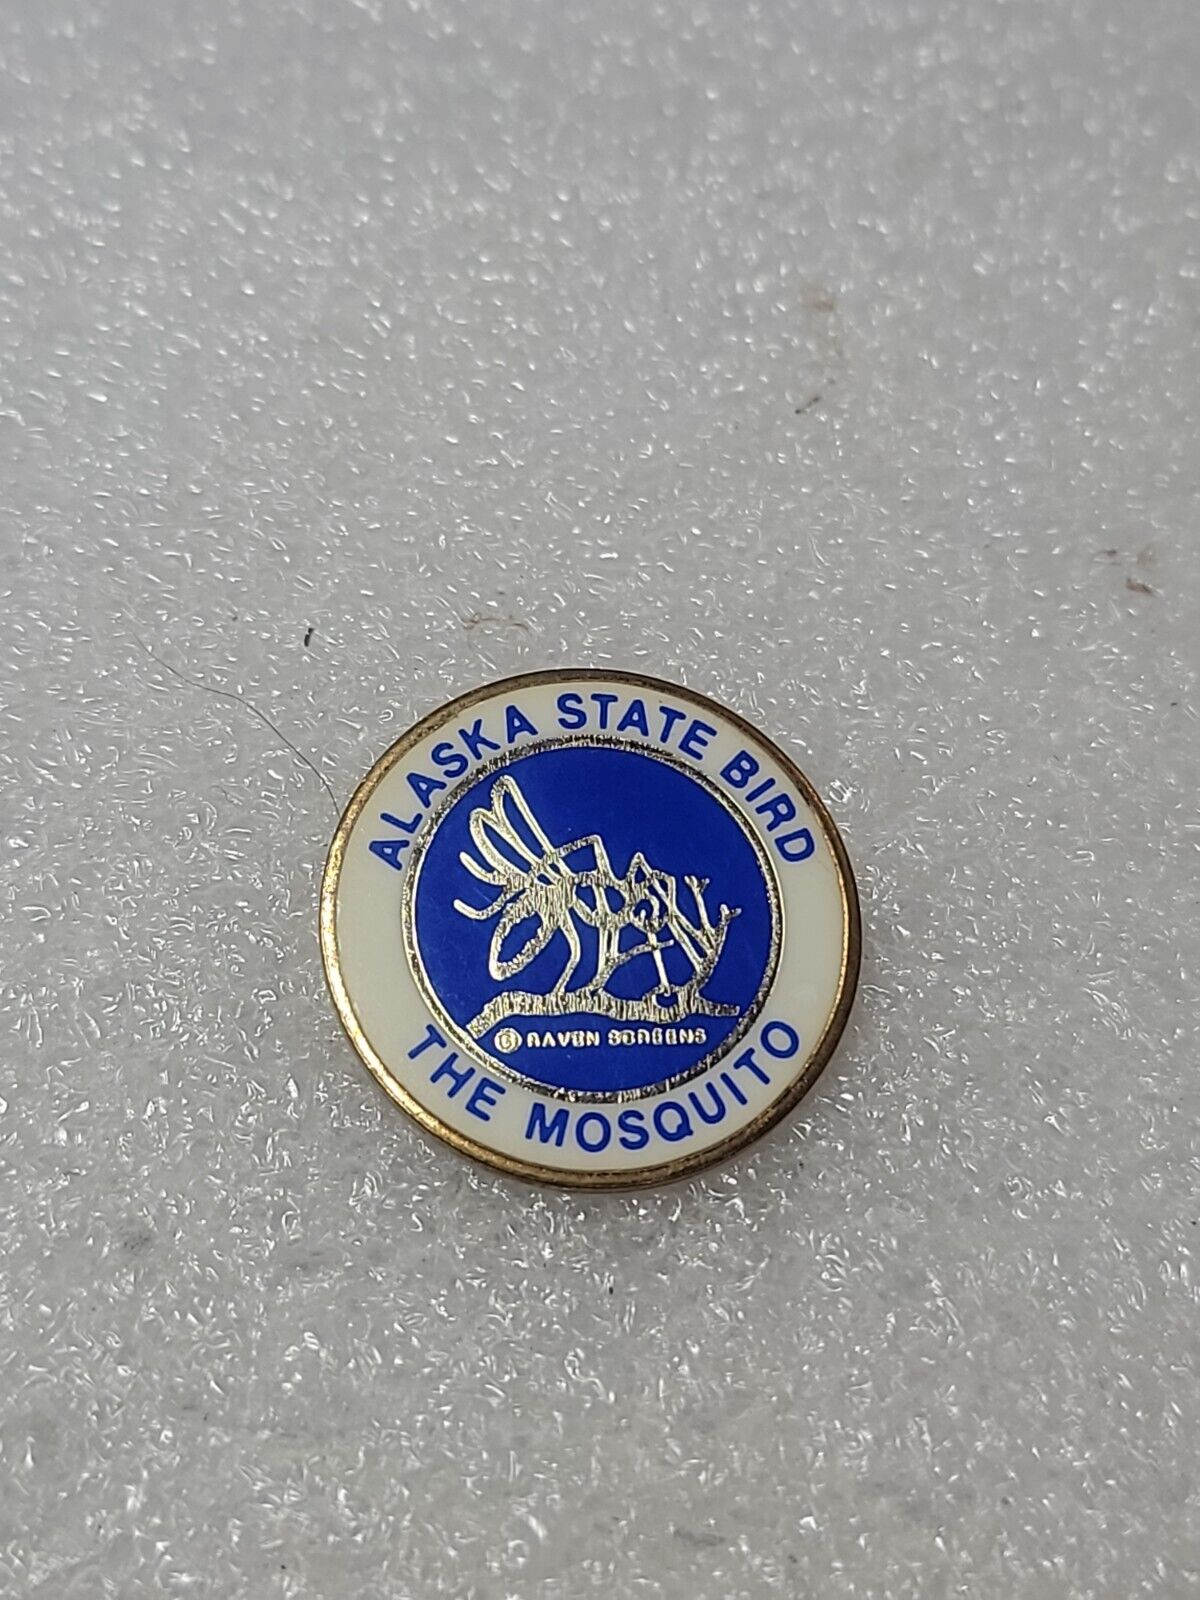 Alaska State Bird Mosquito Pin Hat Tie Lapel Pinback Collectible Travel Souvenir